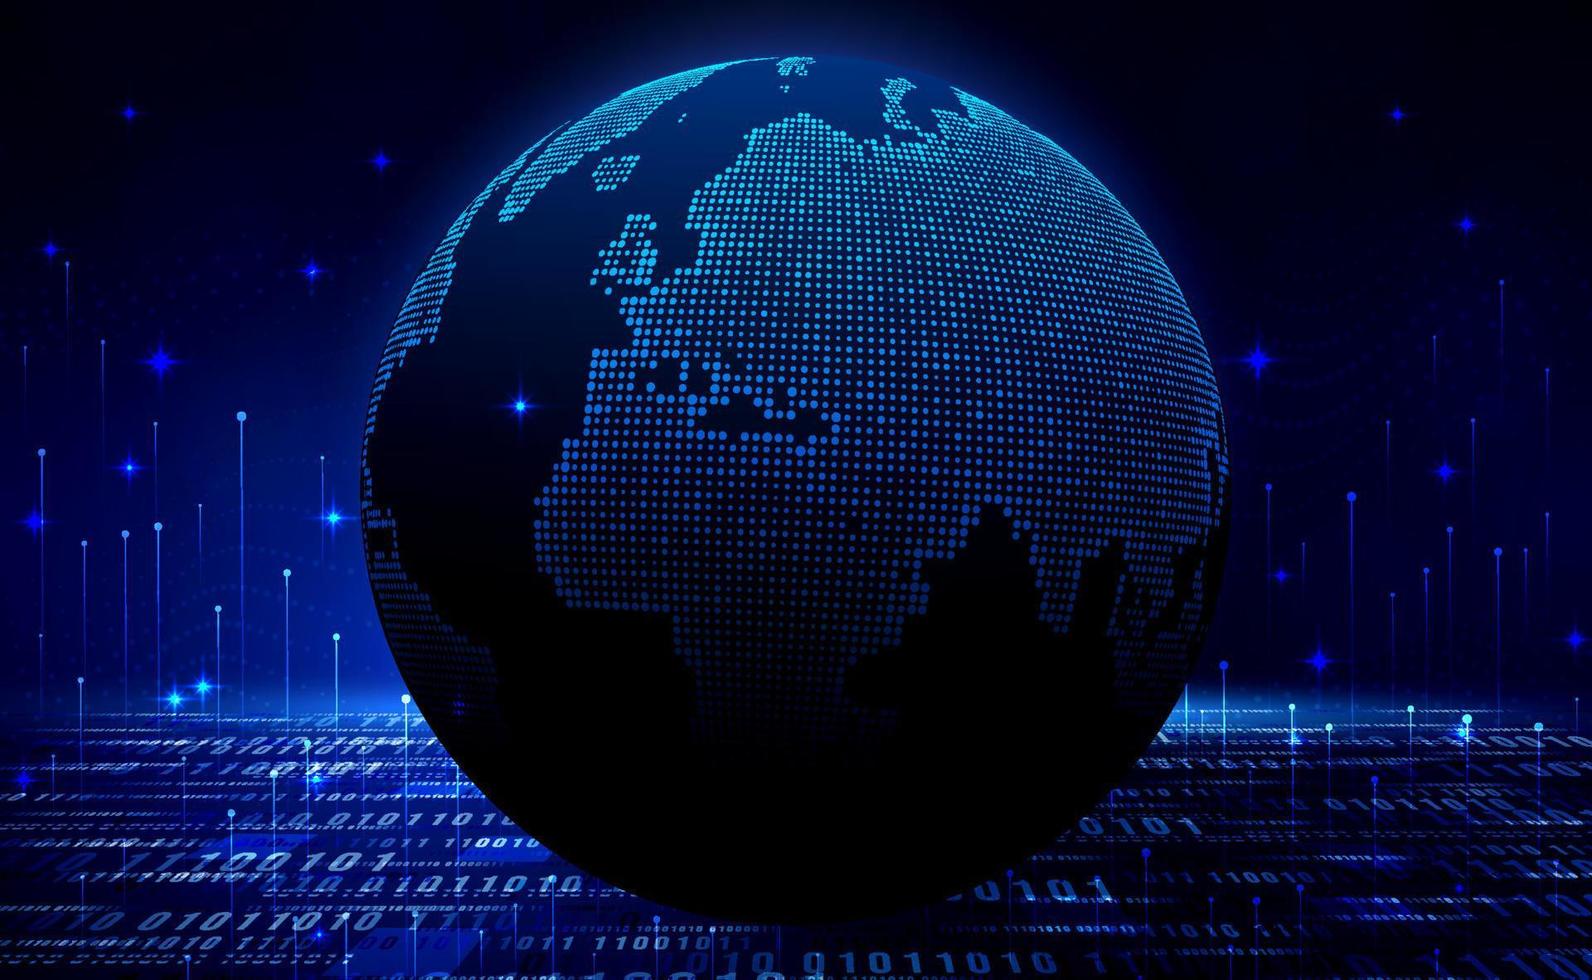 tecnología digital en todo el mundo red global conexión a internet fondo azul, tecnología cibernética abstracta mundo futurista del mapa del planeta, ai big data, innovación 5g futuro wifi inalámbrico, vector de ilustración